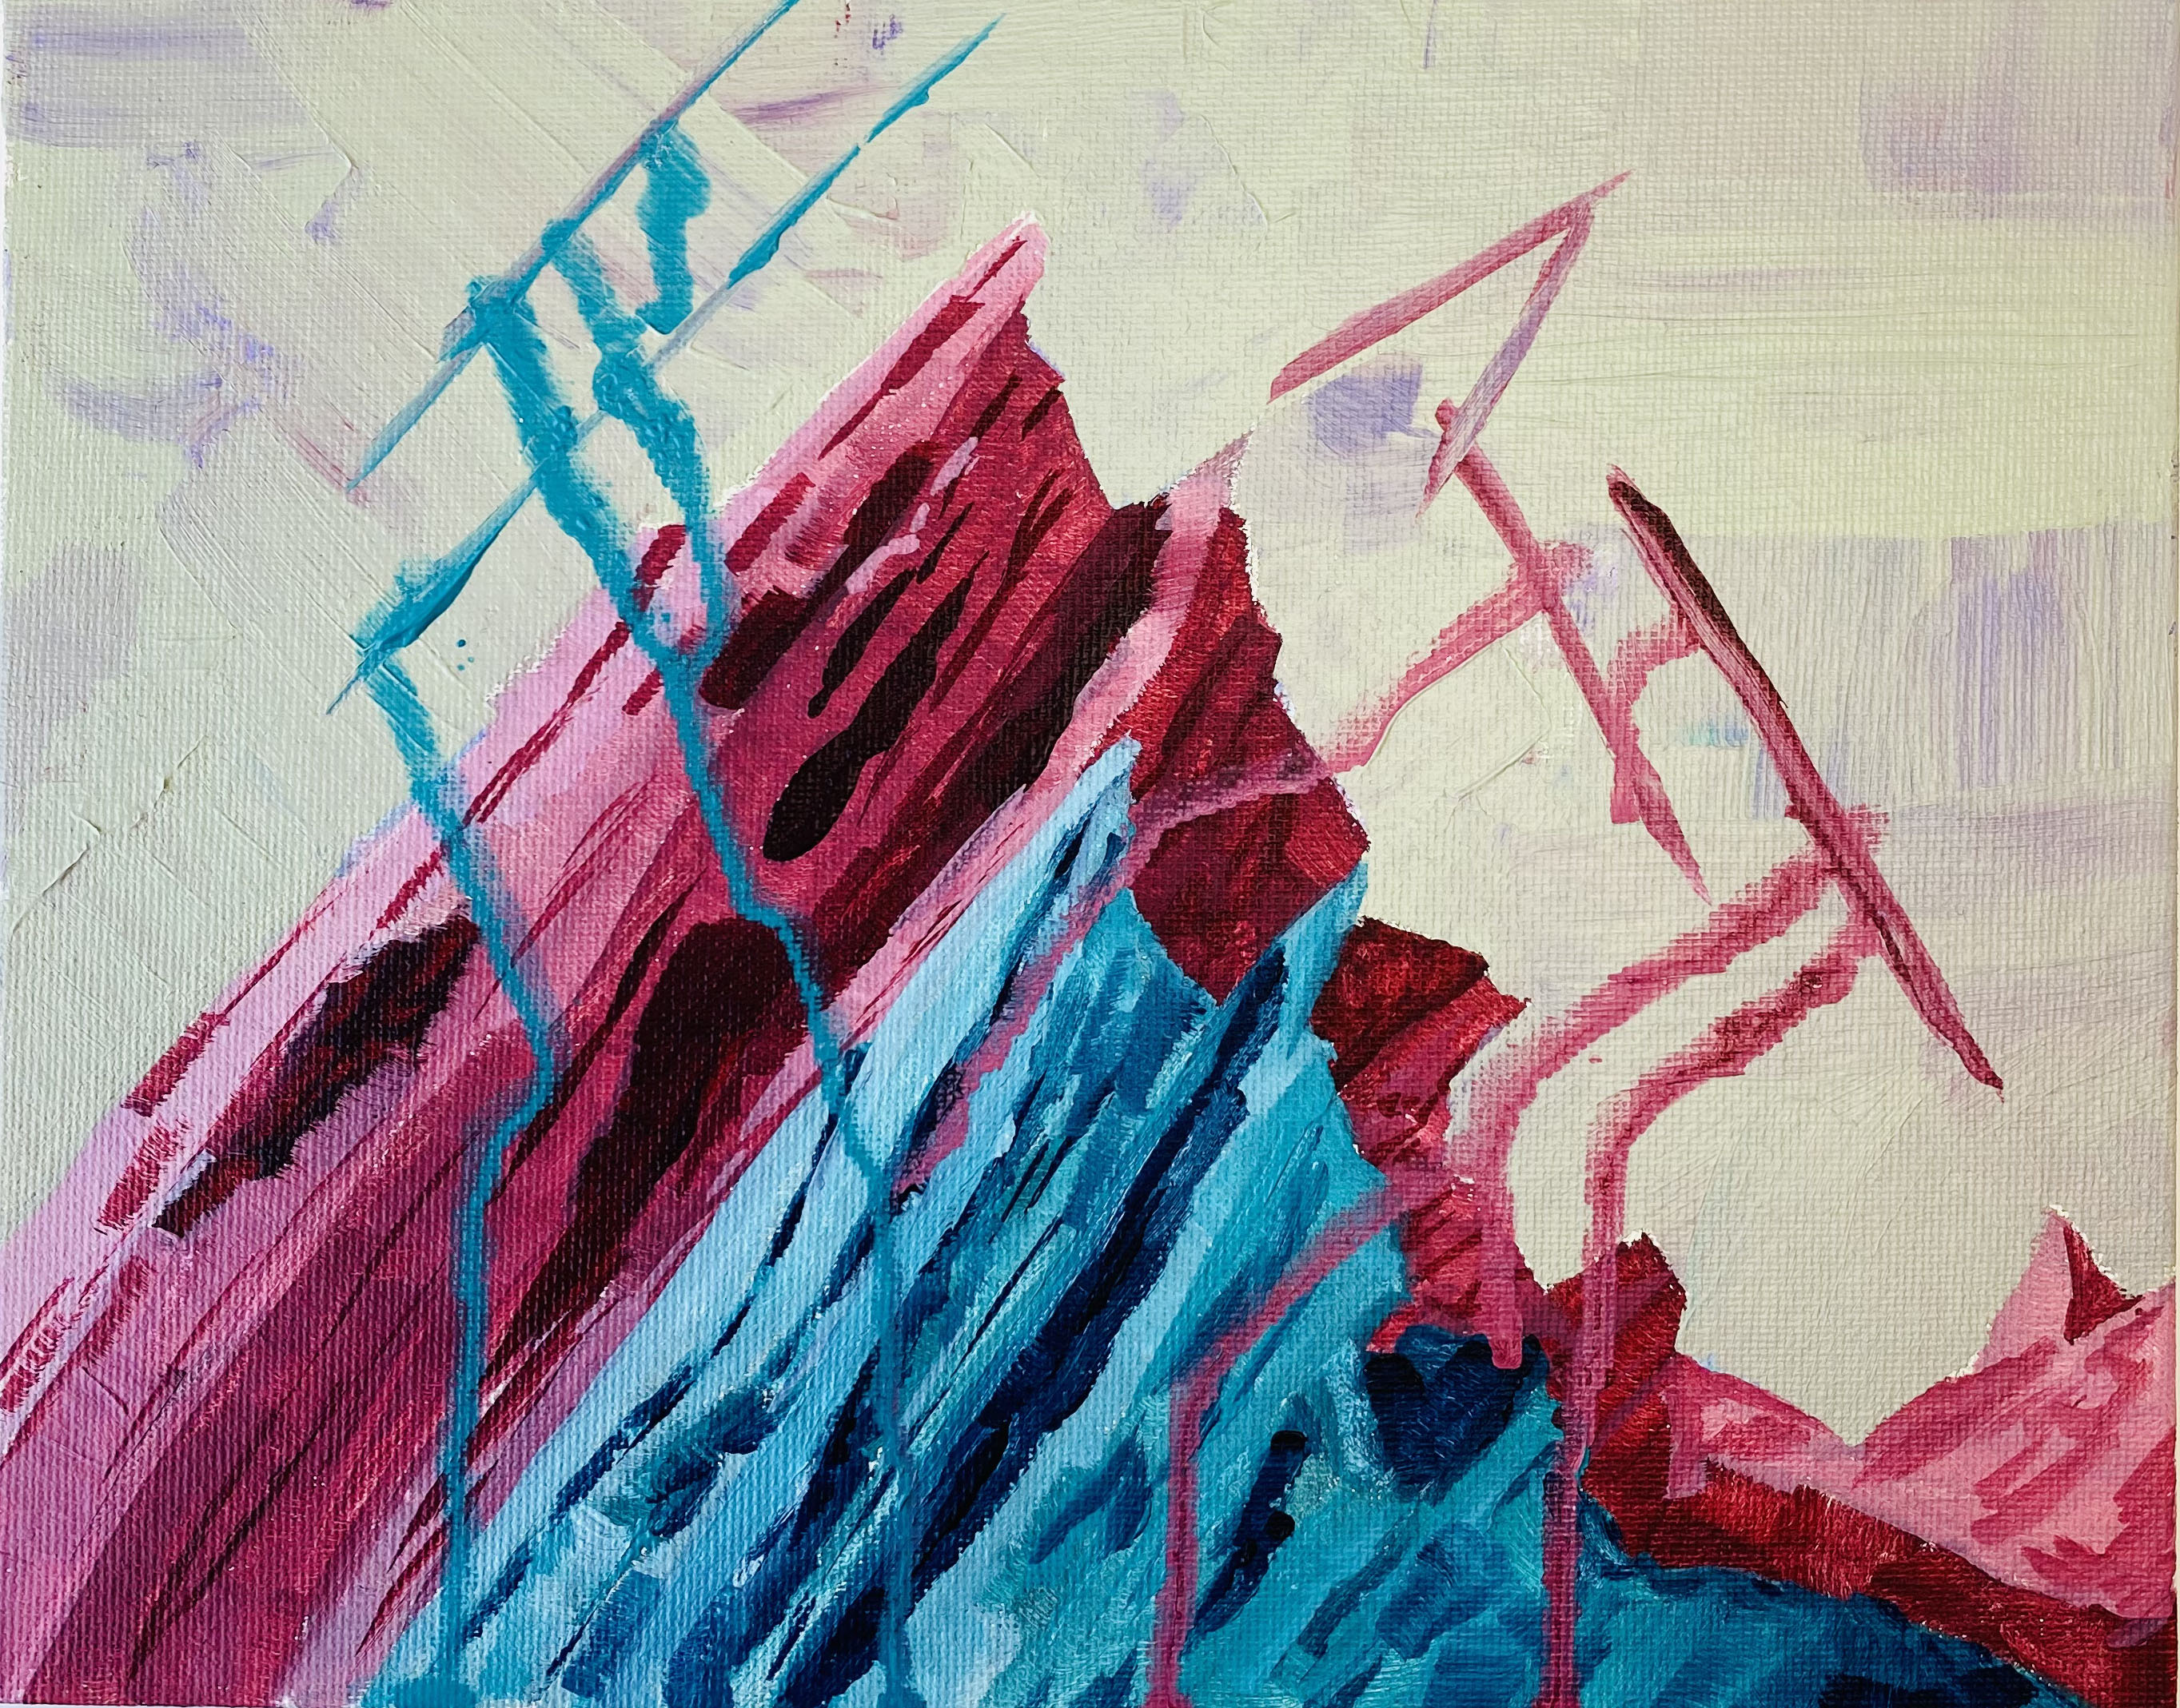 Vasquez Rocks 4 / acrylic on canvas / 8 x 10 inches / 2021